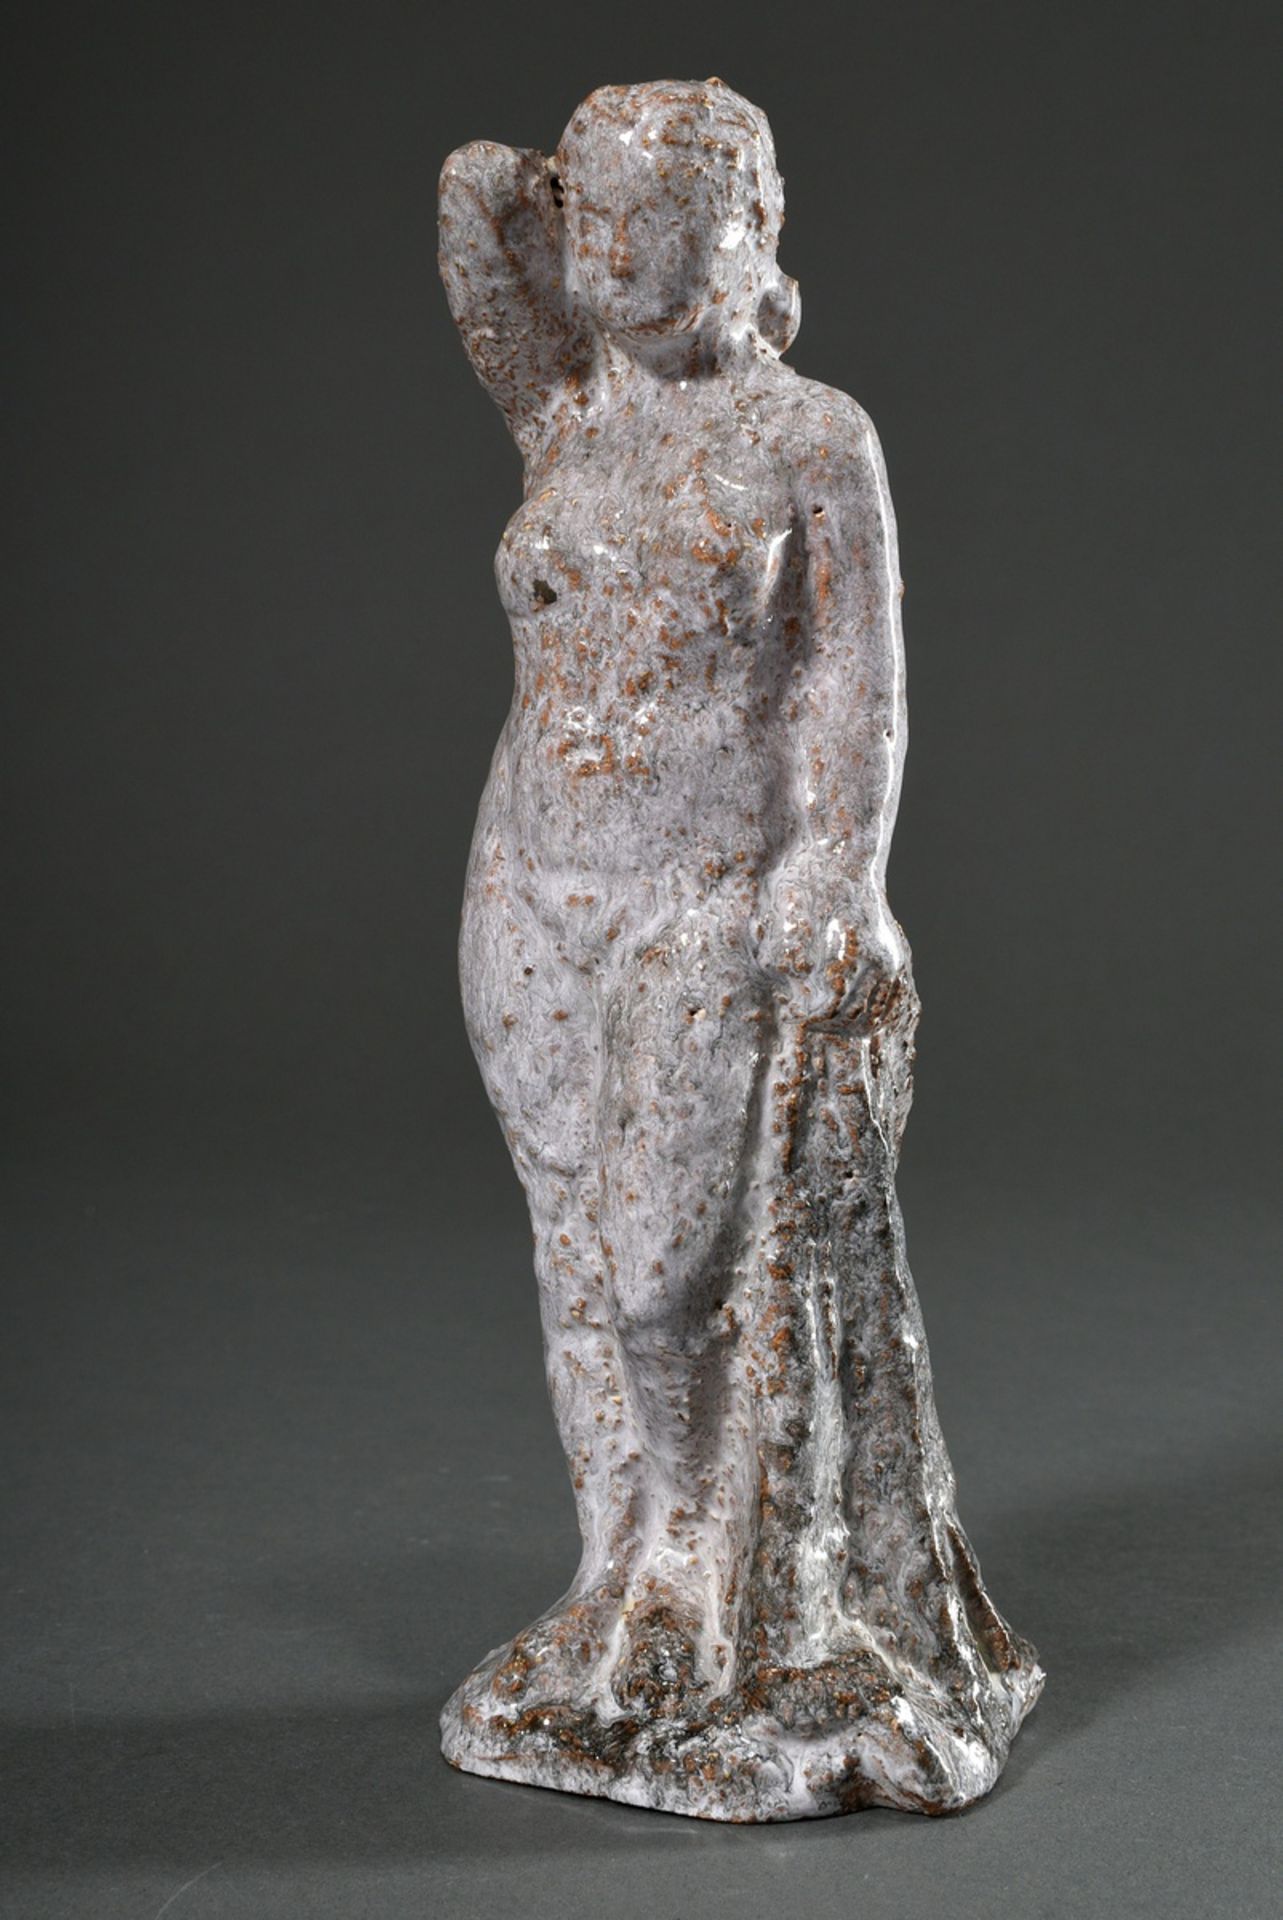 3 Various Maetzel, Monika (1917-2010) figures "Female nude with cloth", ceramic light glazed, 2x in - Image 5 of 7